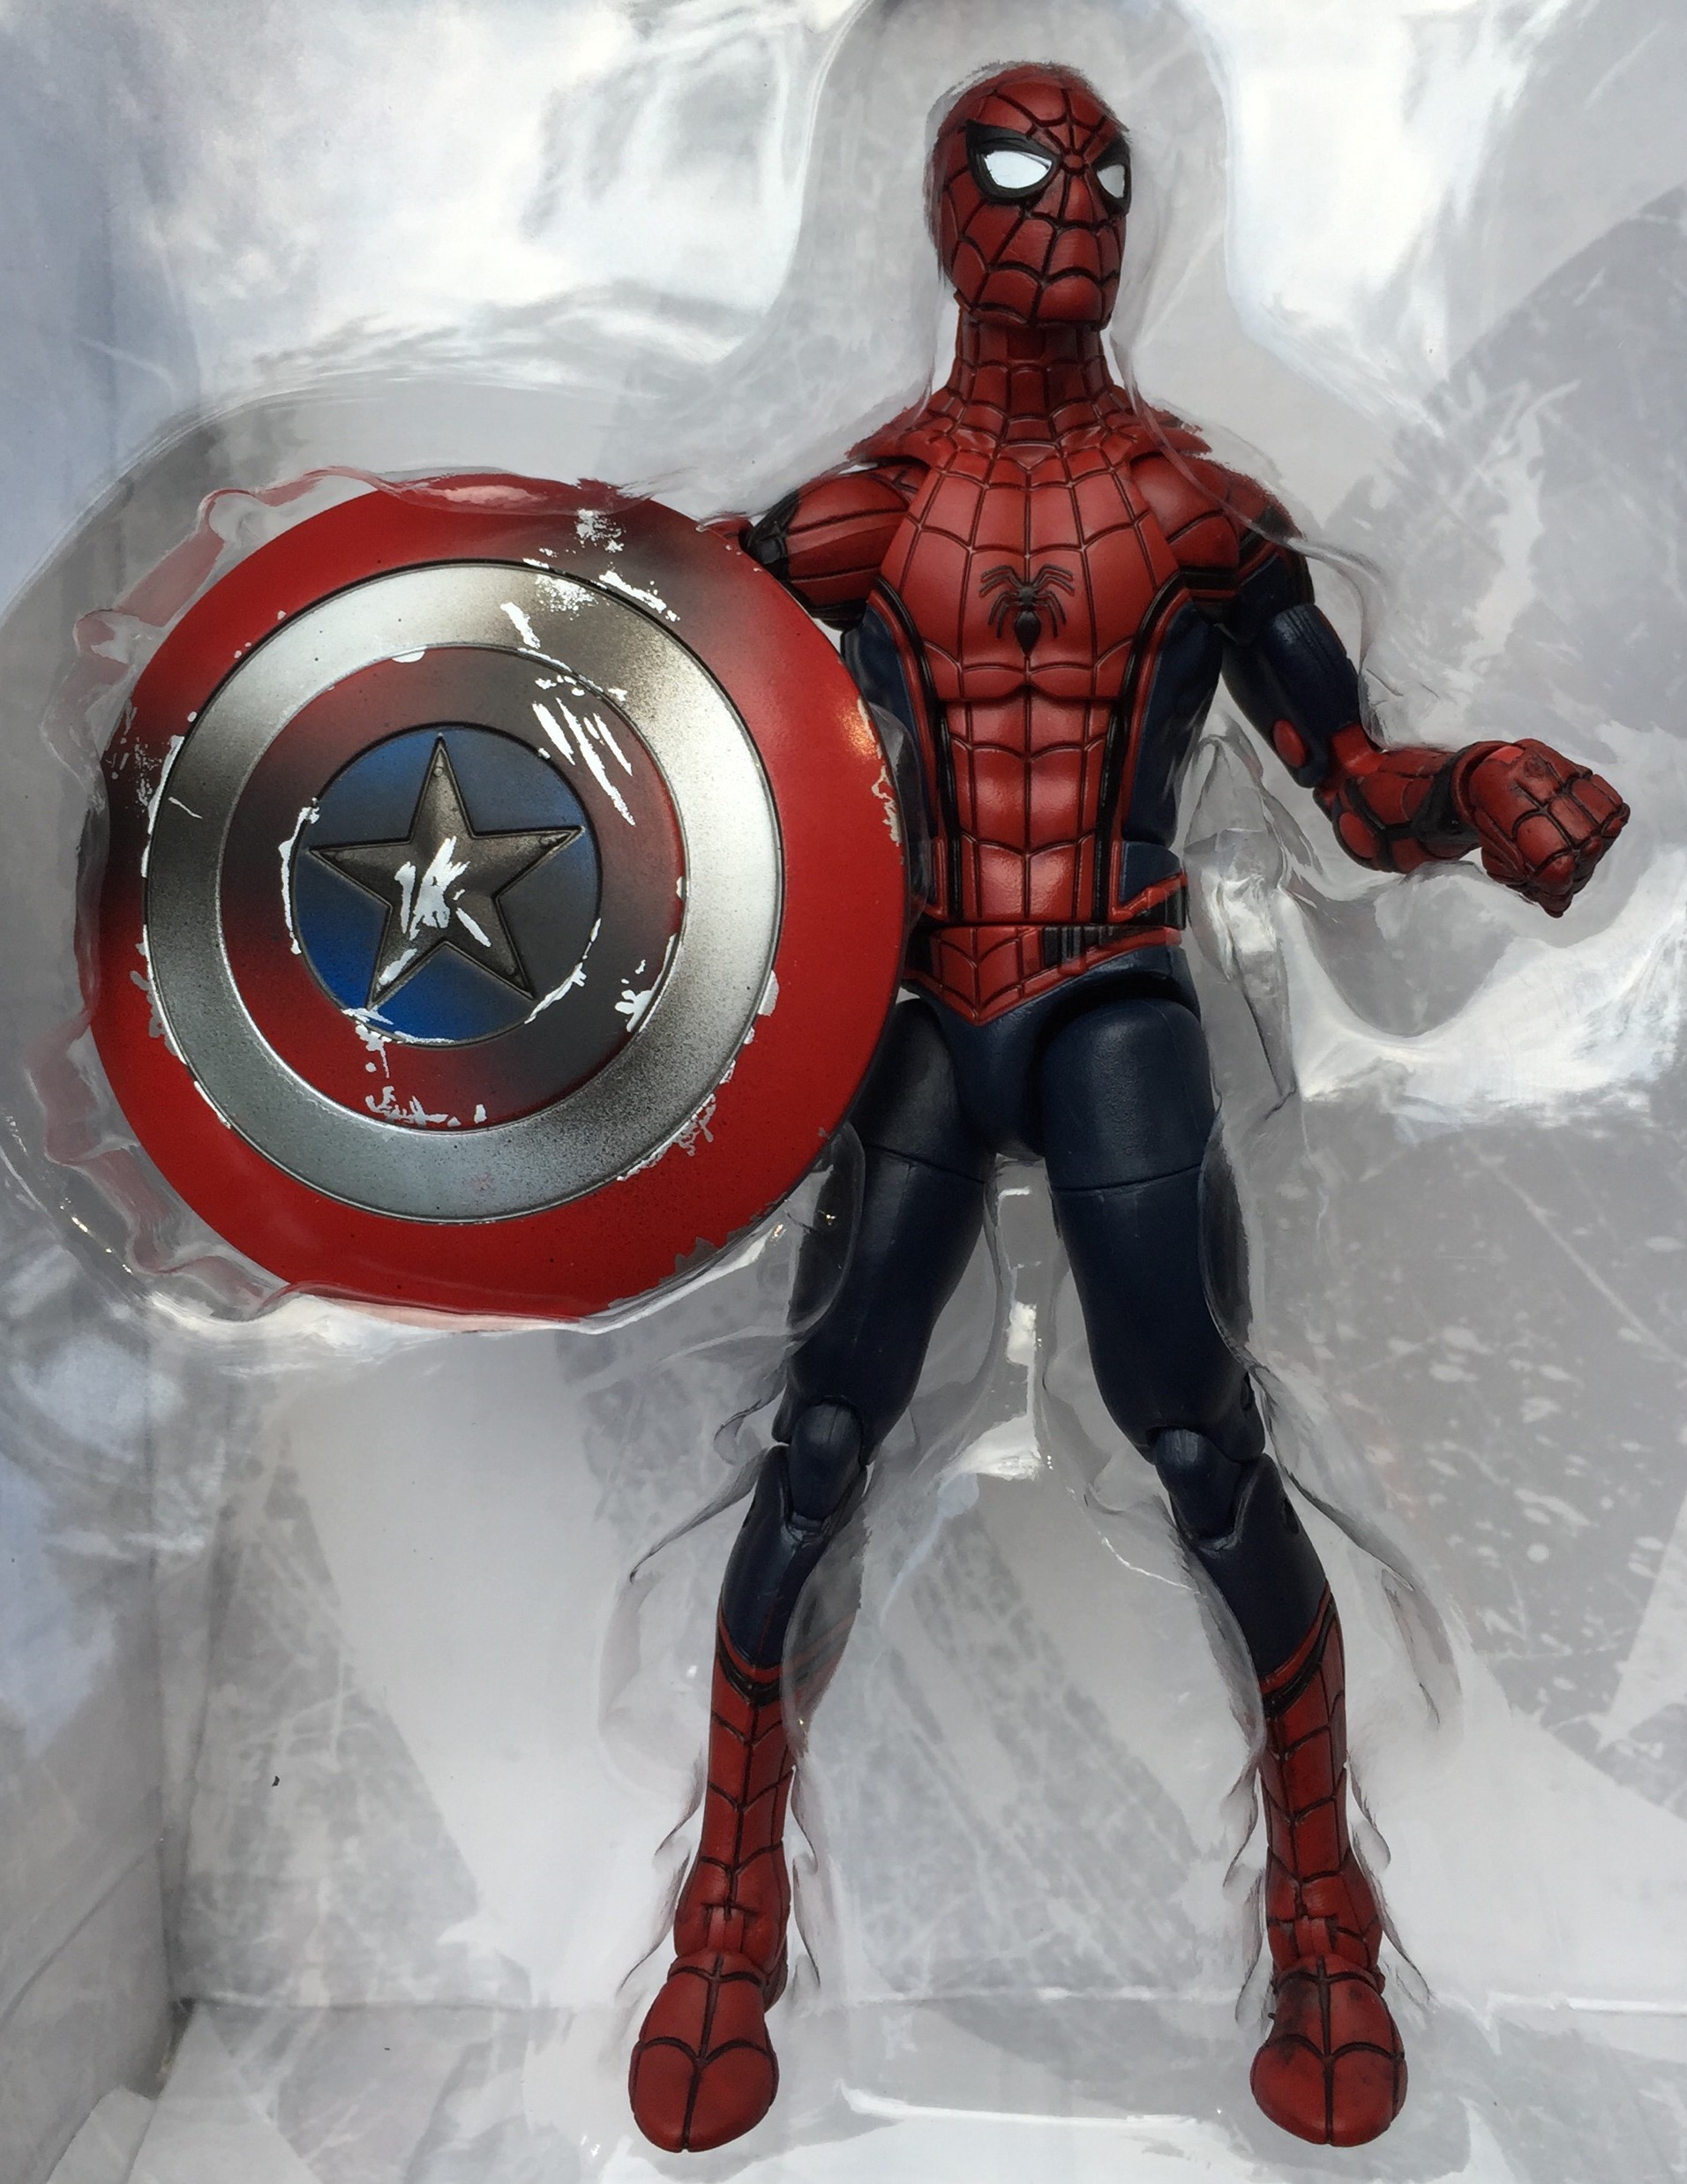 Civil War Marvel Legends Spider-Man Review & Photos - Marvel Toy News